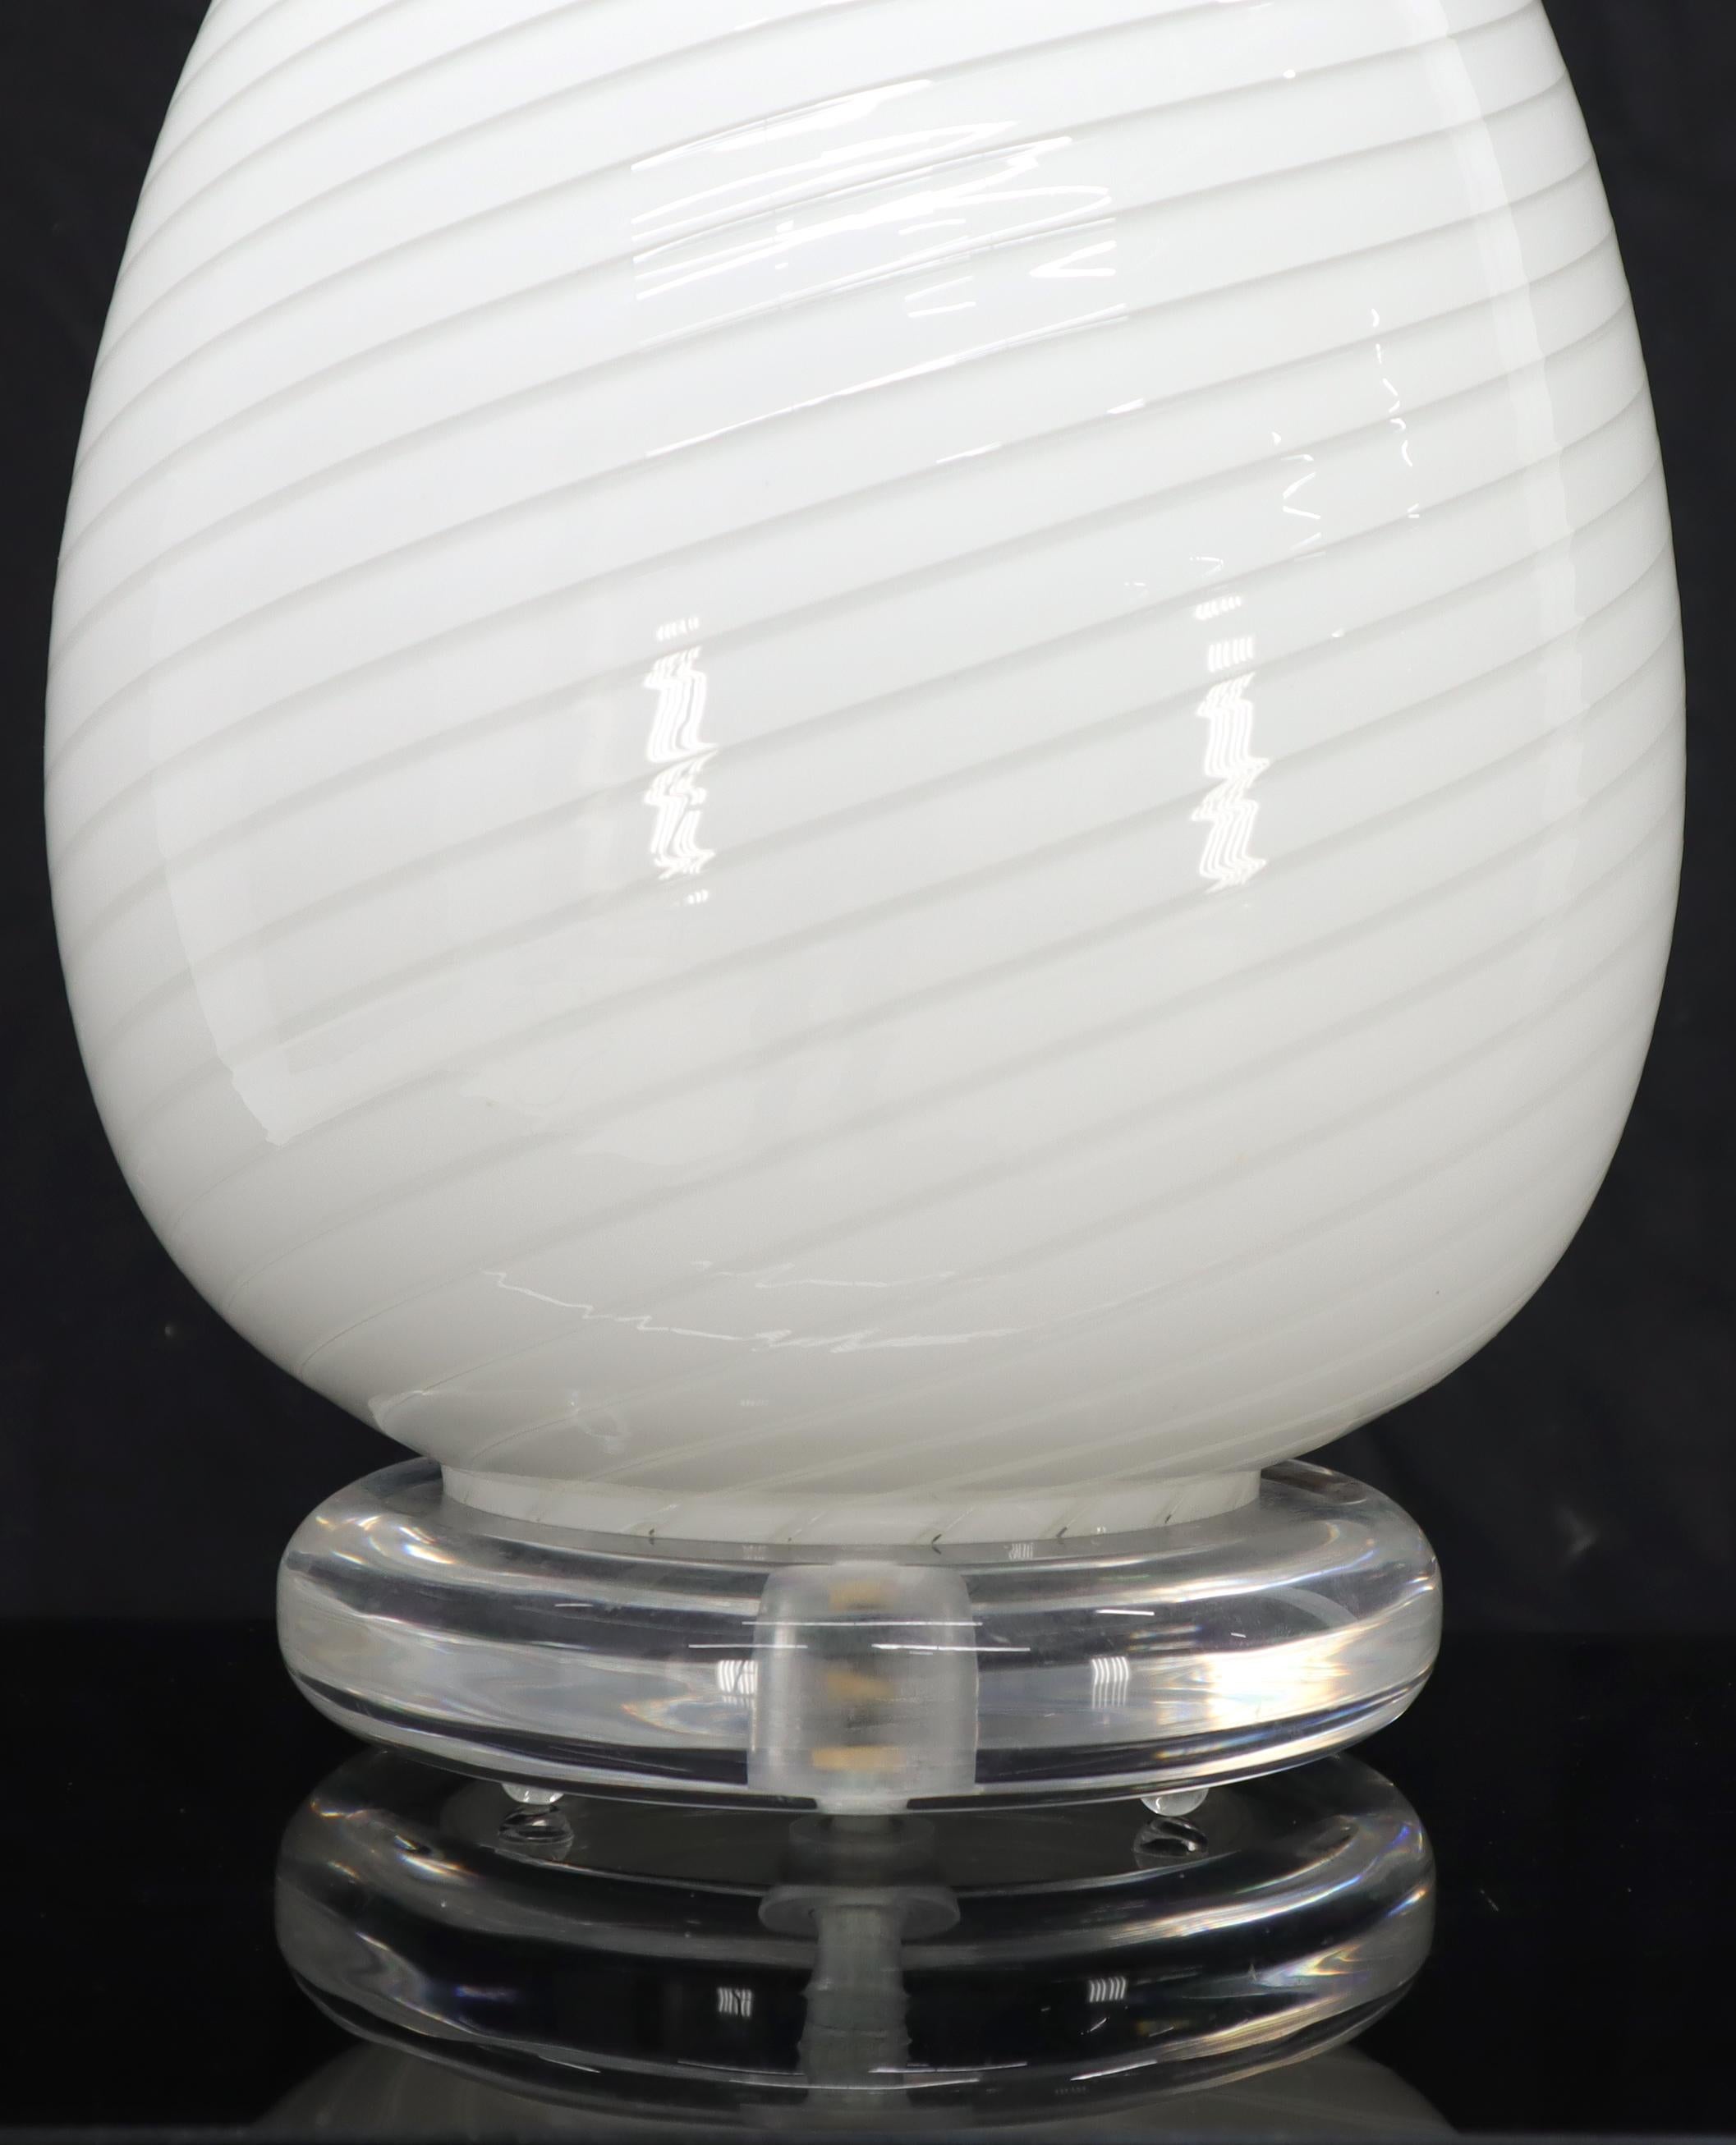 Blown Glass Egg Shape Murano Glass Swirl Pattern Table Lamp For Sale